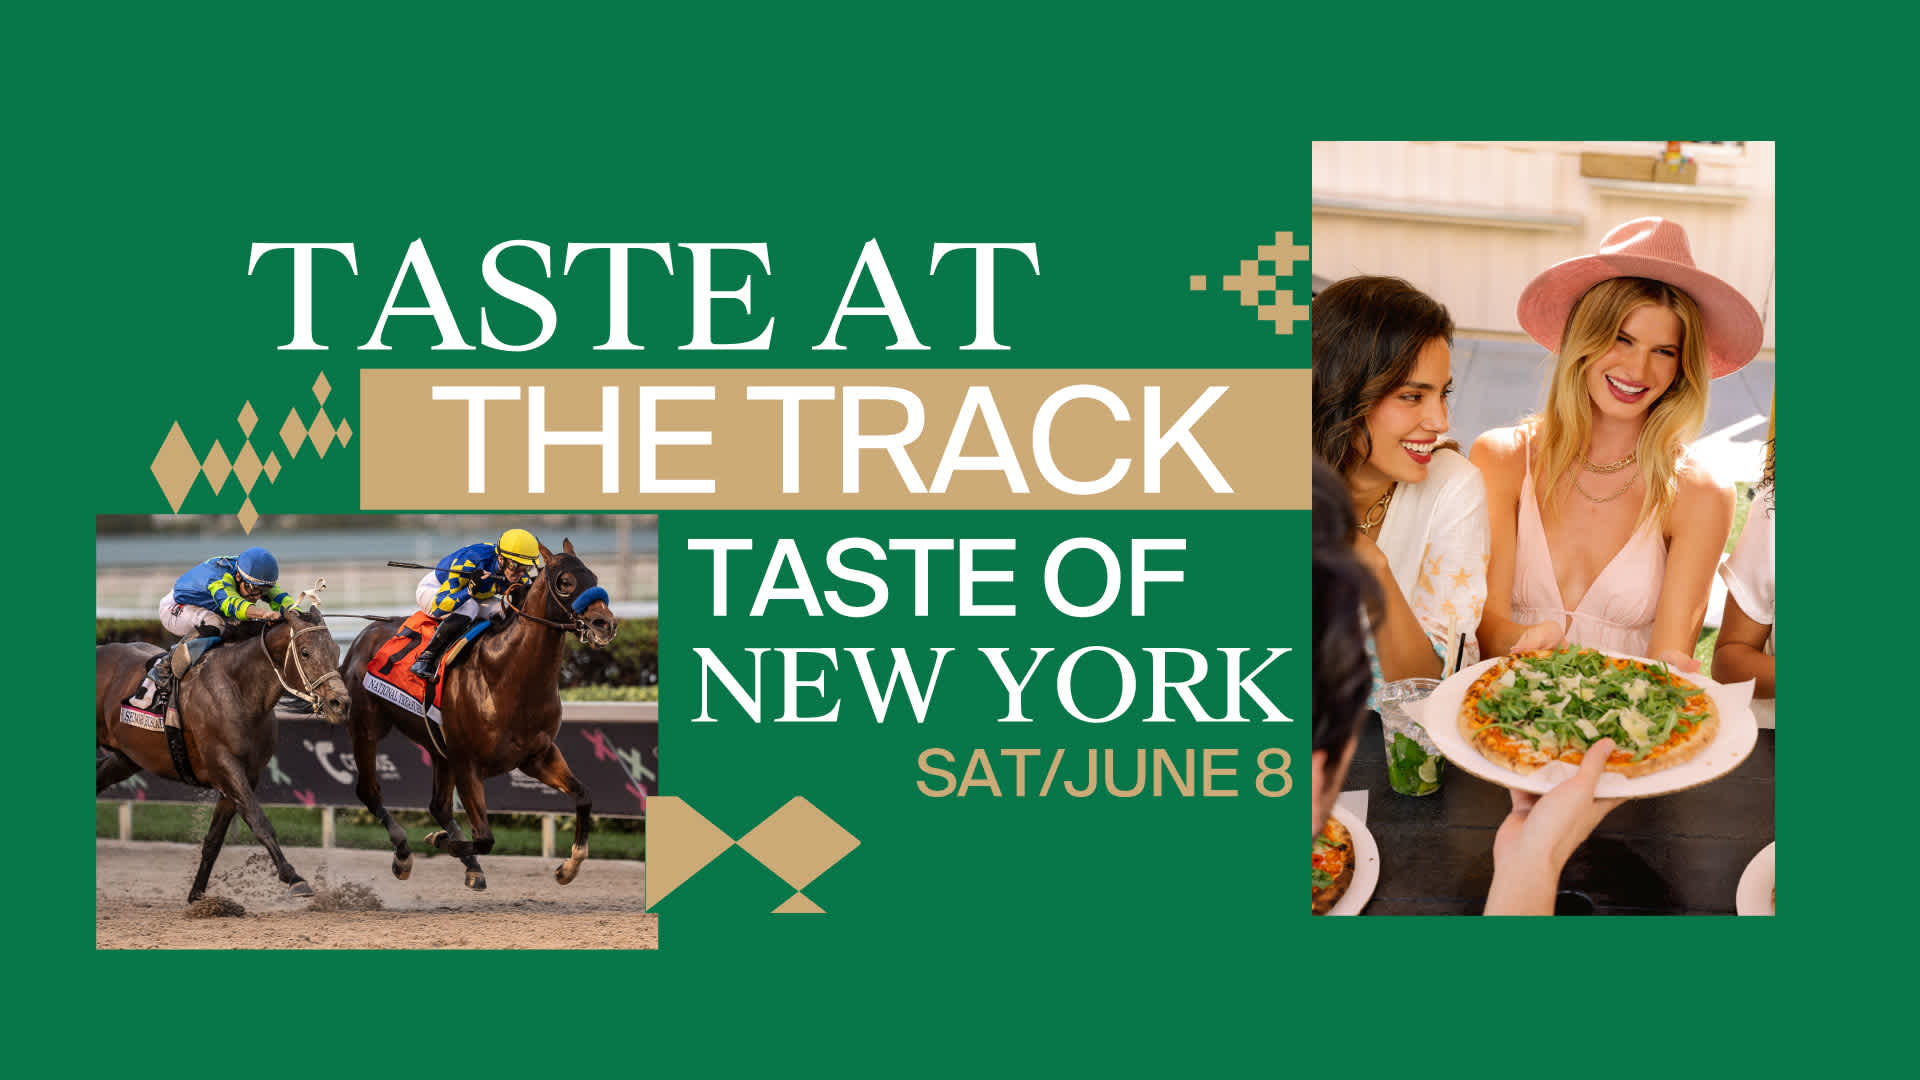 Taste at the Track - Taste of New York Promo